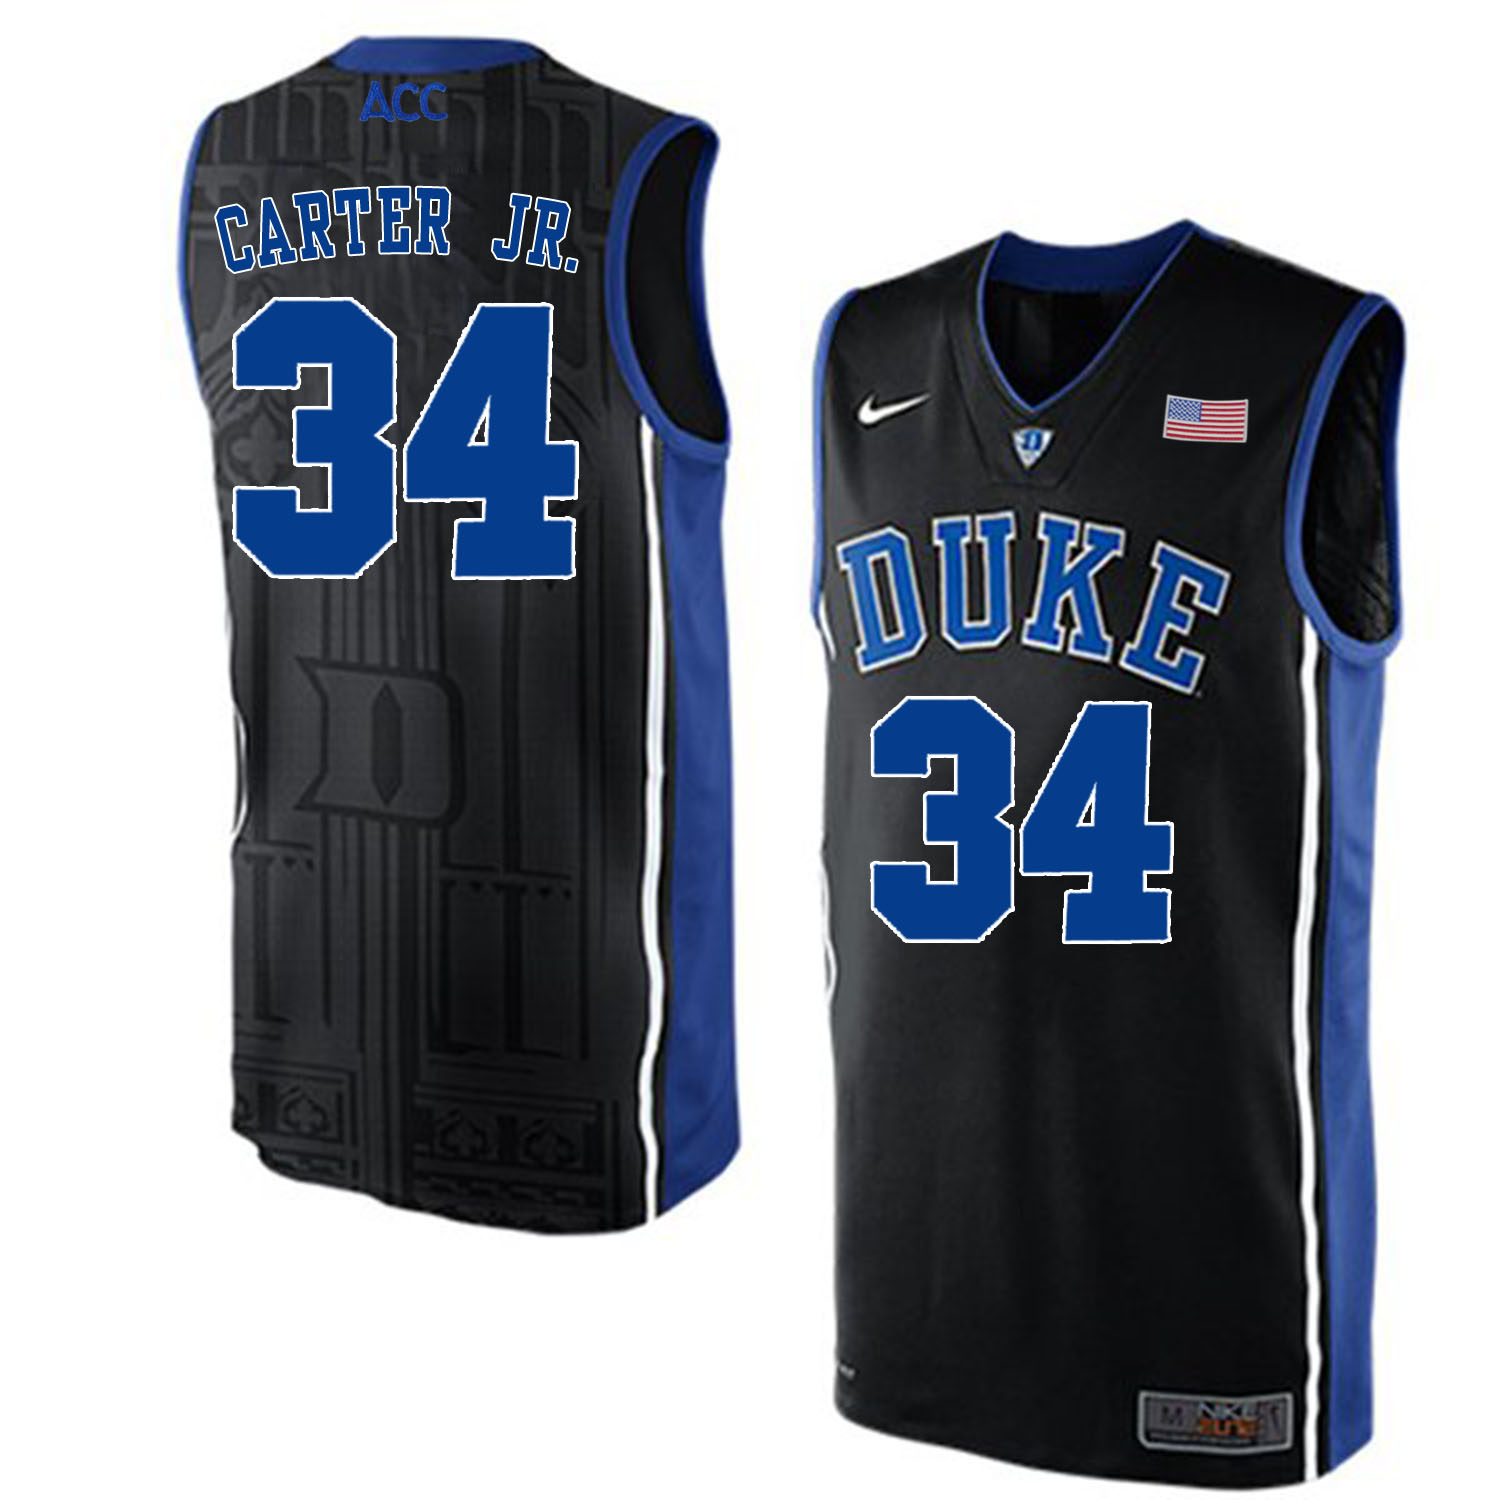 Duke Blue Devils 34 Wendell Carter Jr. Black College Basketball Elite Jersey